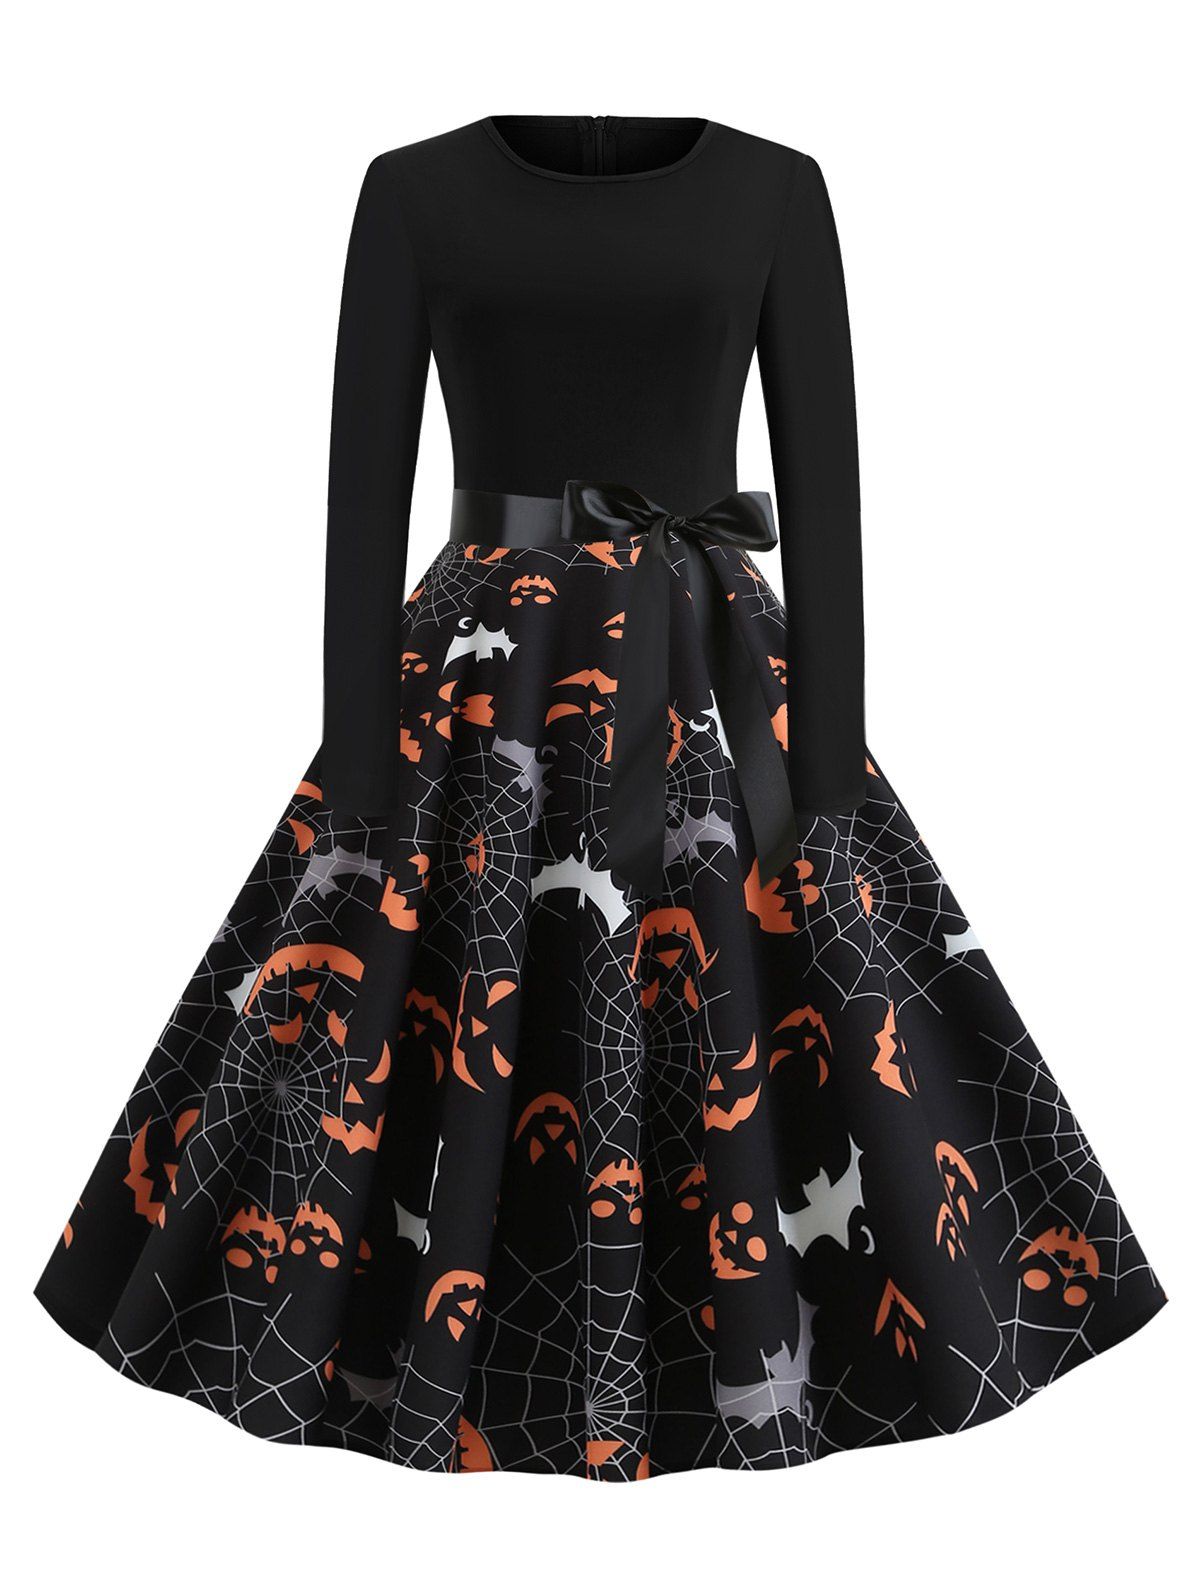 Halloween Pumpkin Face Spider Net Print Belted Dress - multicolor M